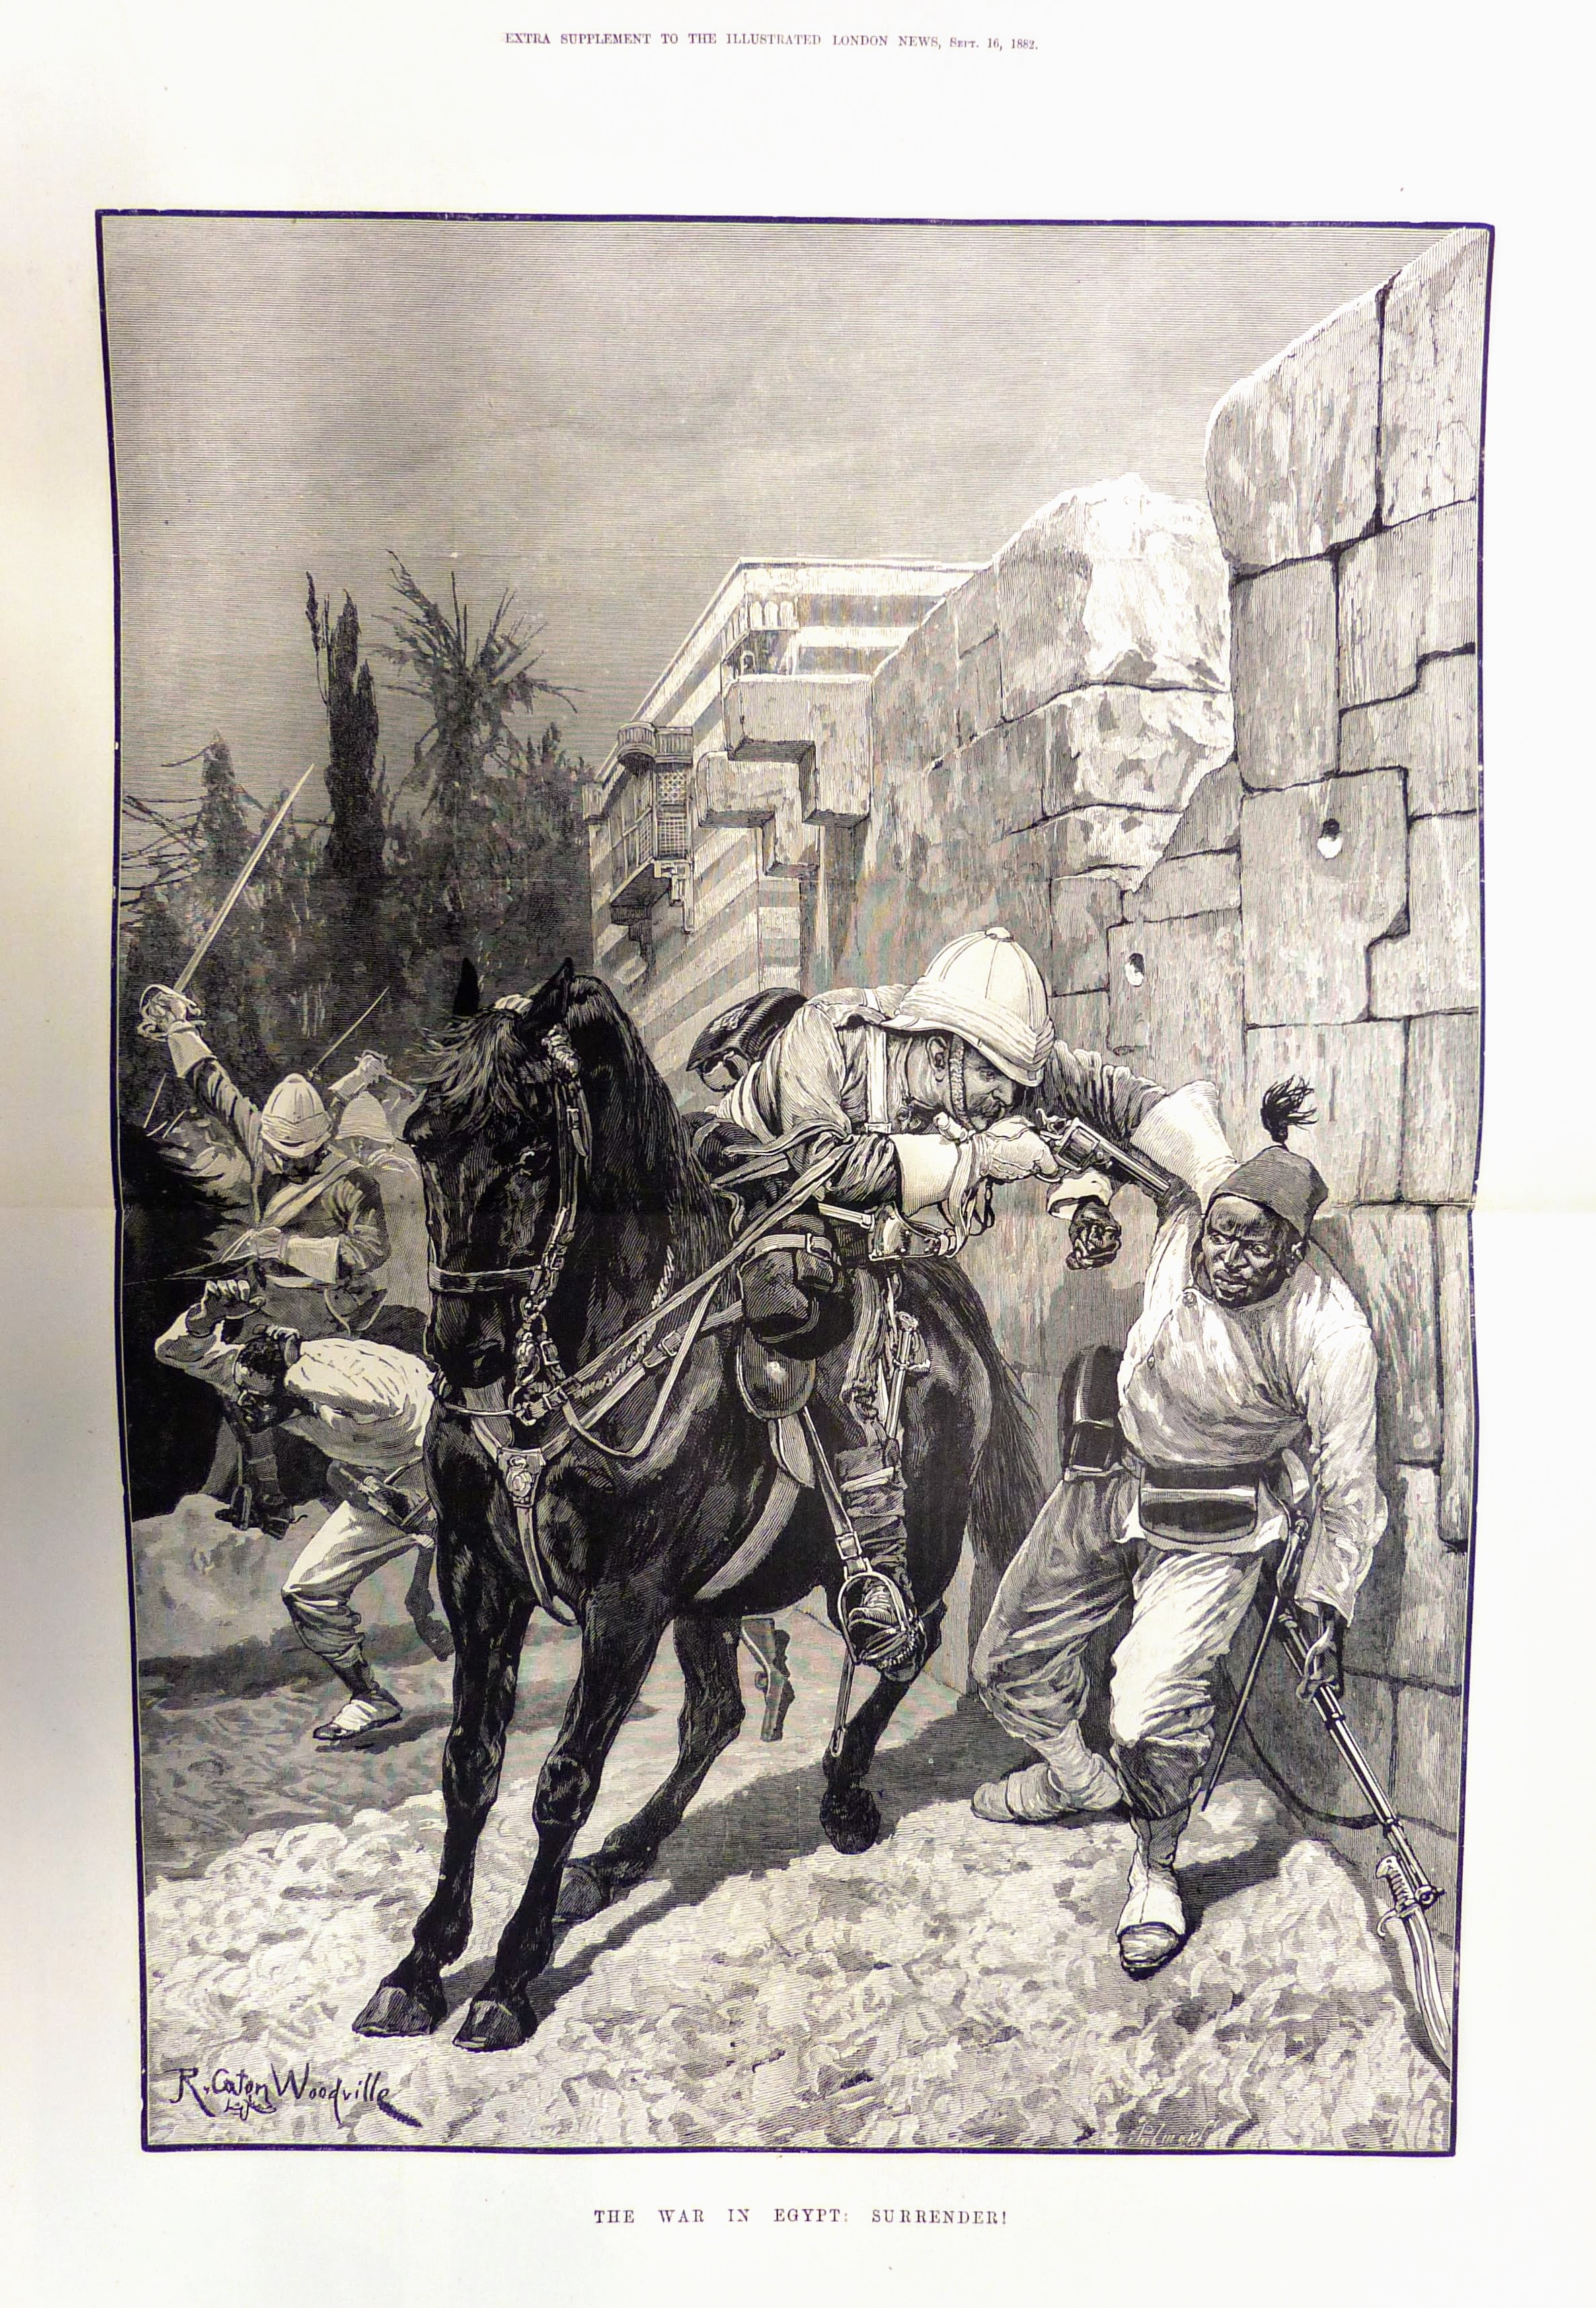 ‘The war in Egypt: Surrender!’.  The Illustrated London News vol. 81, no. 2263, 16 September 1882, back supplement. CUL NPR.c.313